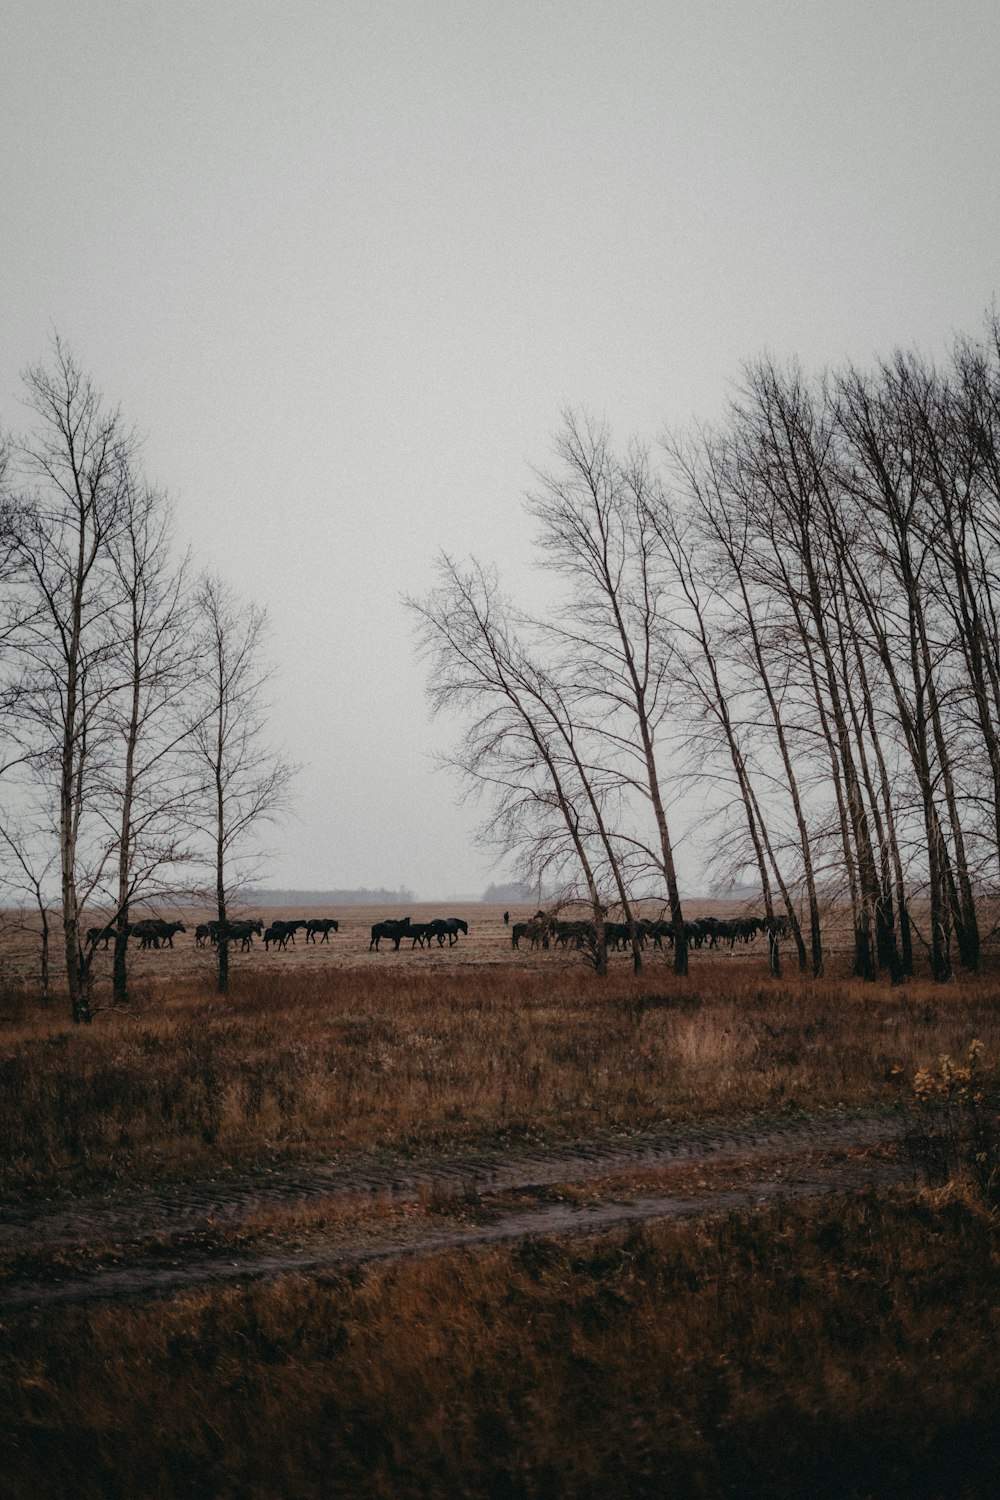 a herd of horses walking across a dry grass field